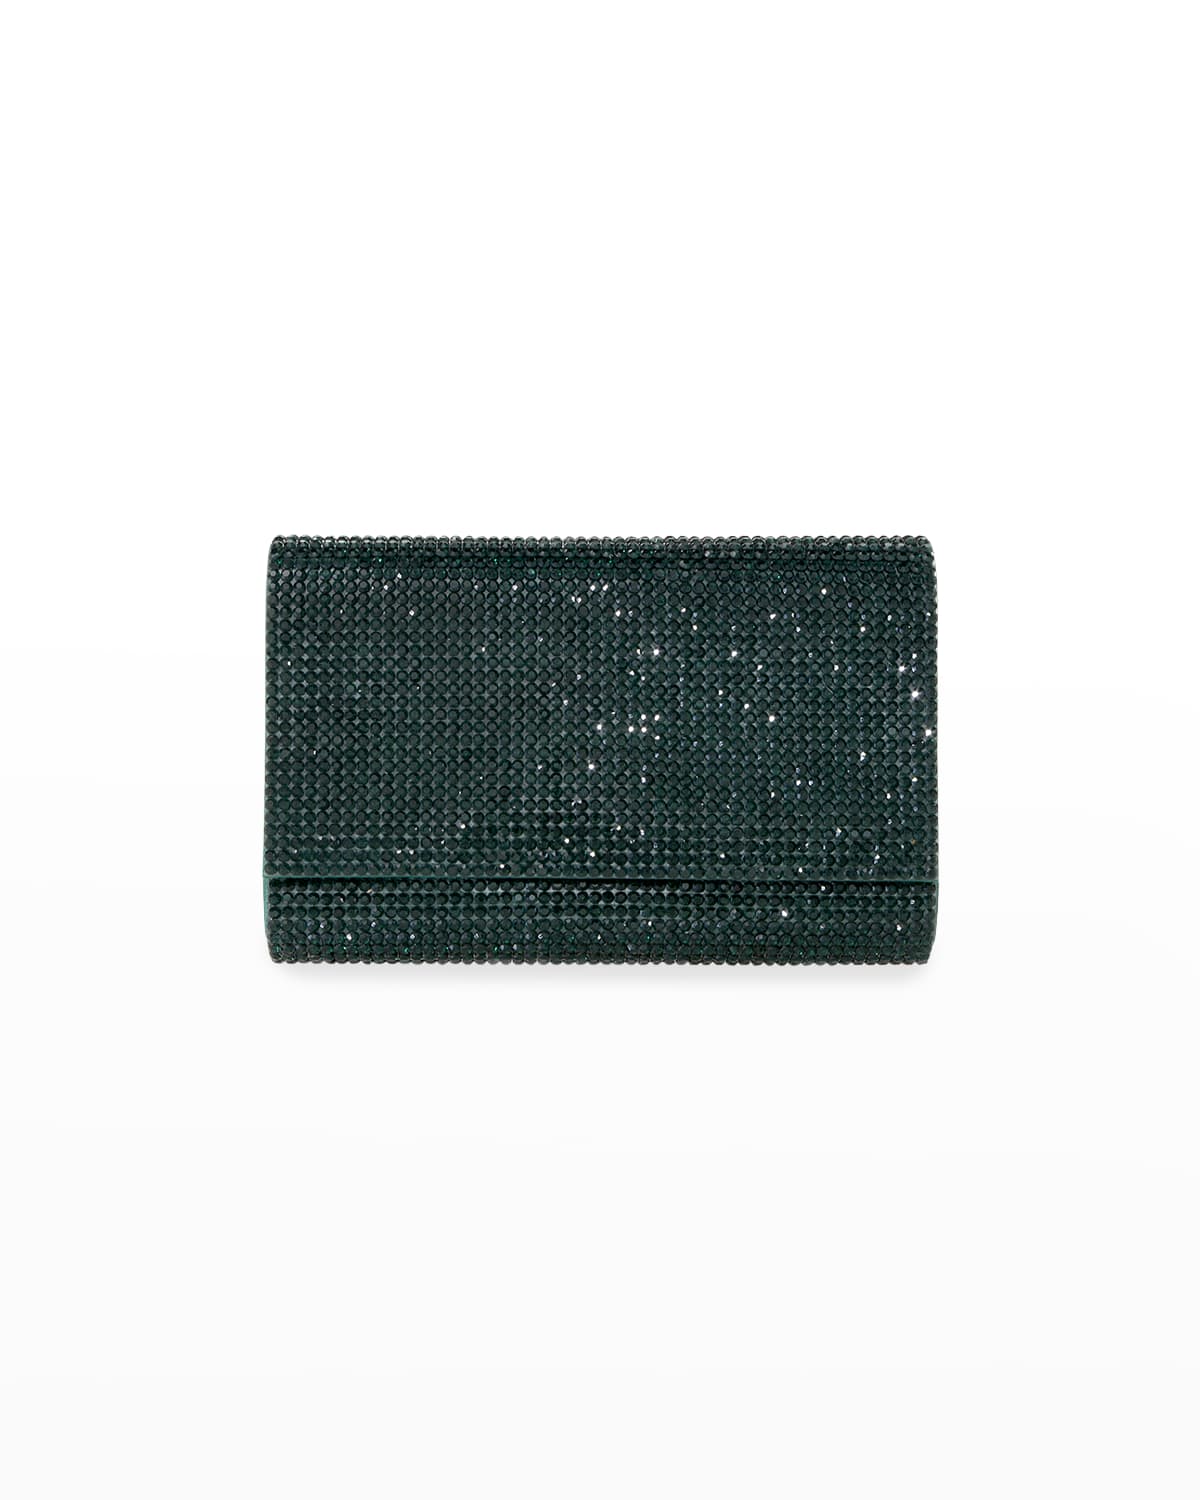 Silver Crystal Handbag | Neiman Marcus